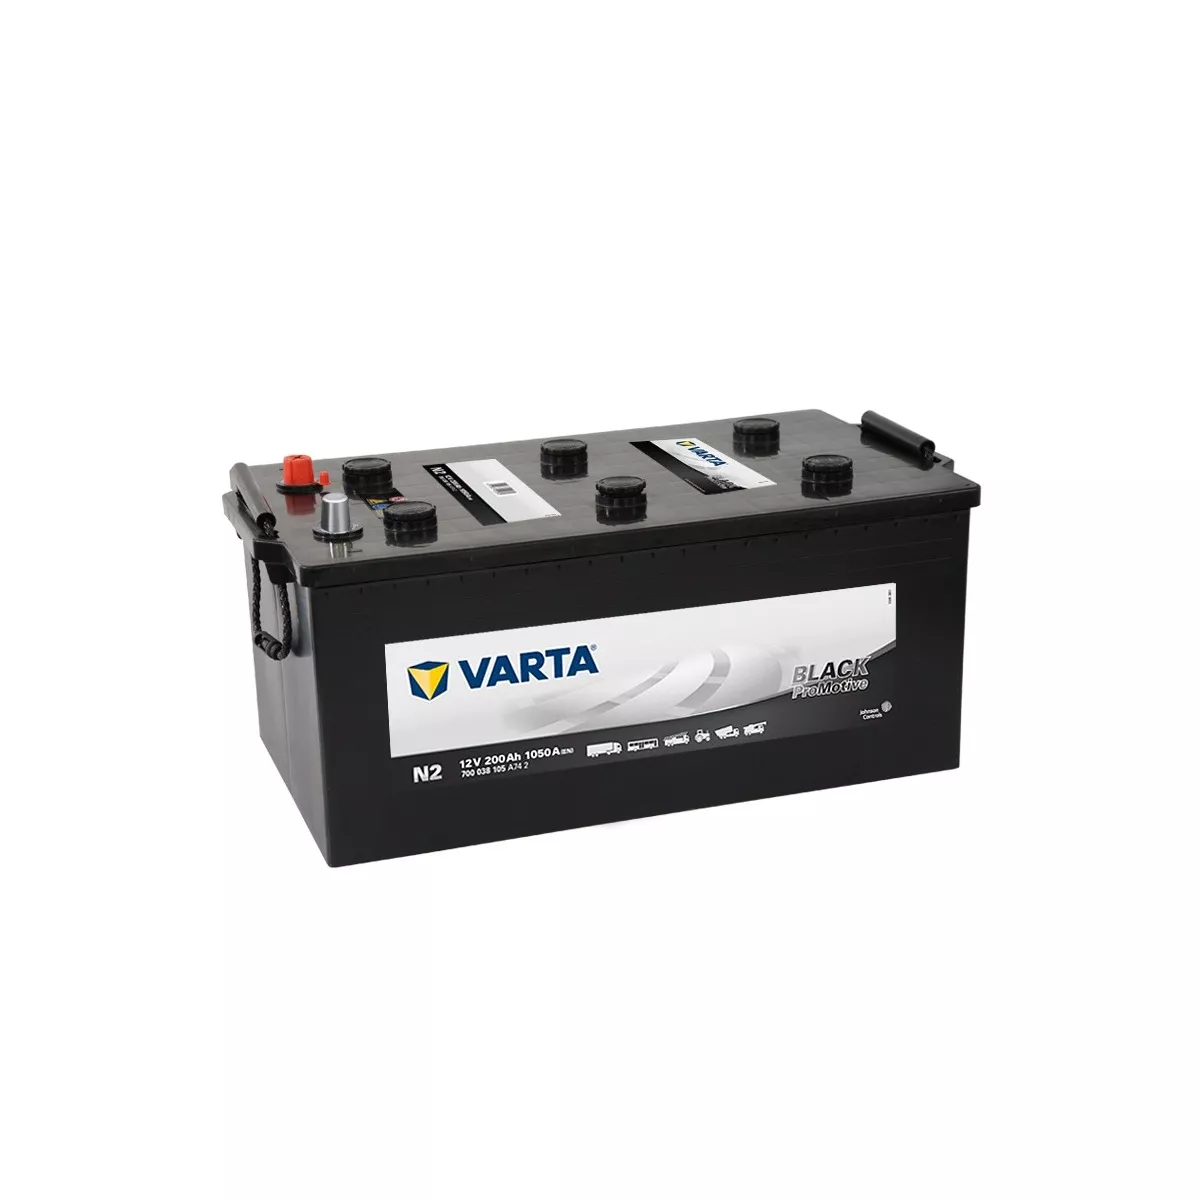 https://www.batteryset.com/468-large_default/batterie-varta-promotive-black-n2.jpg